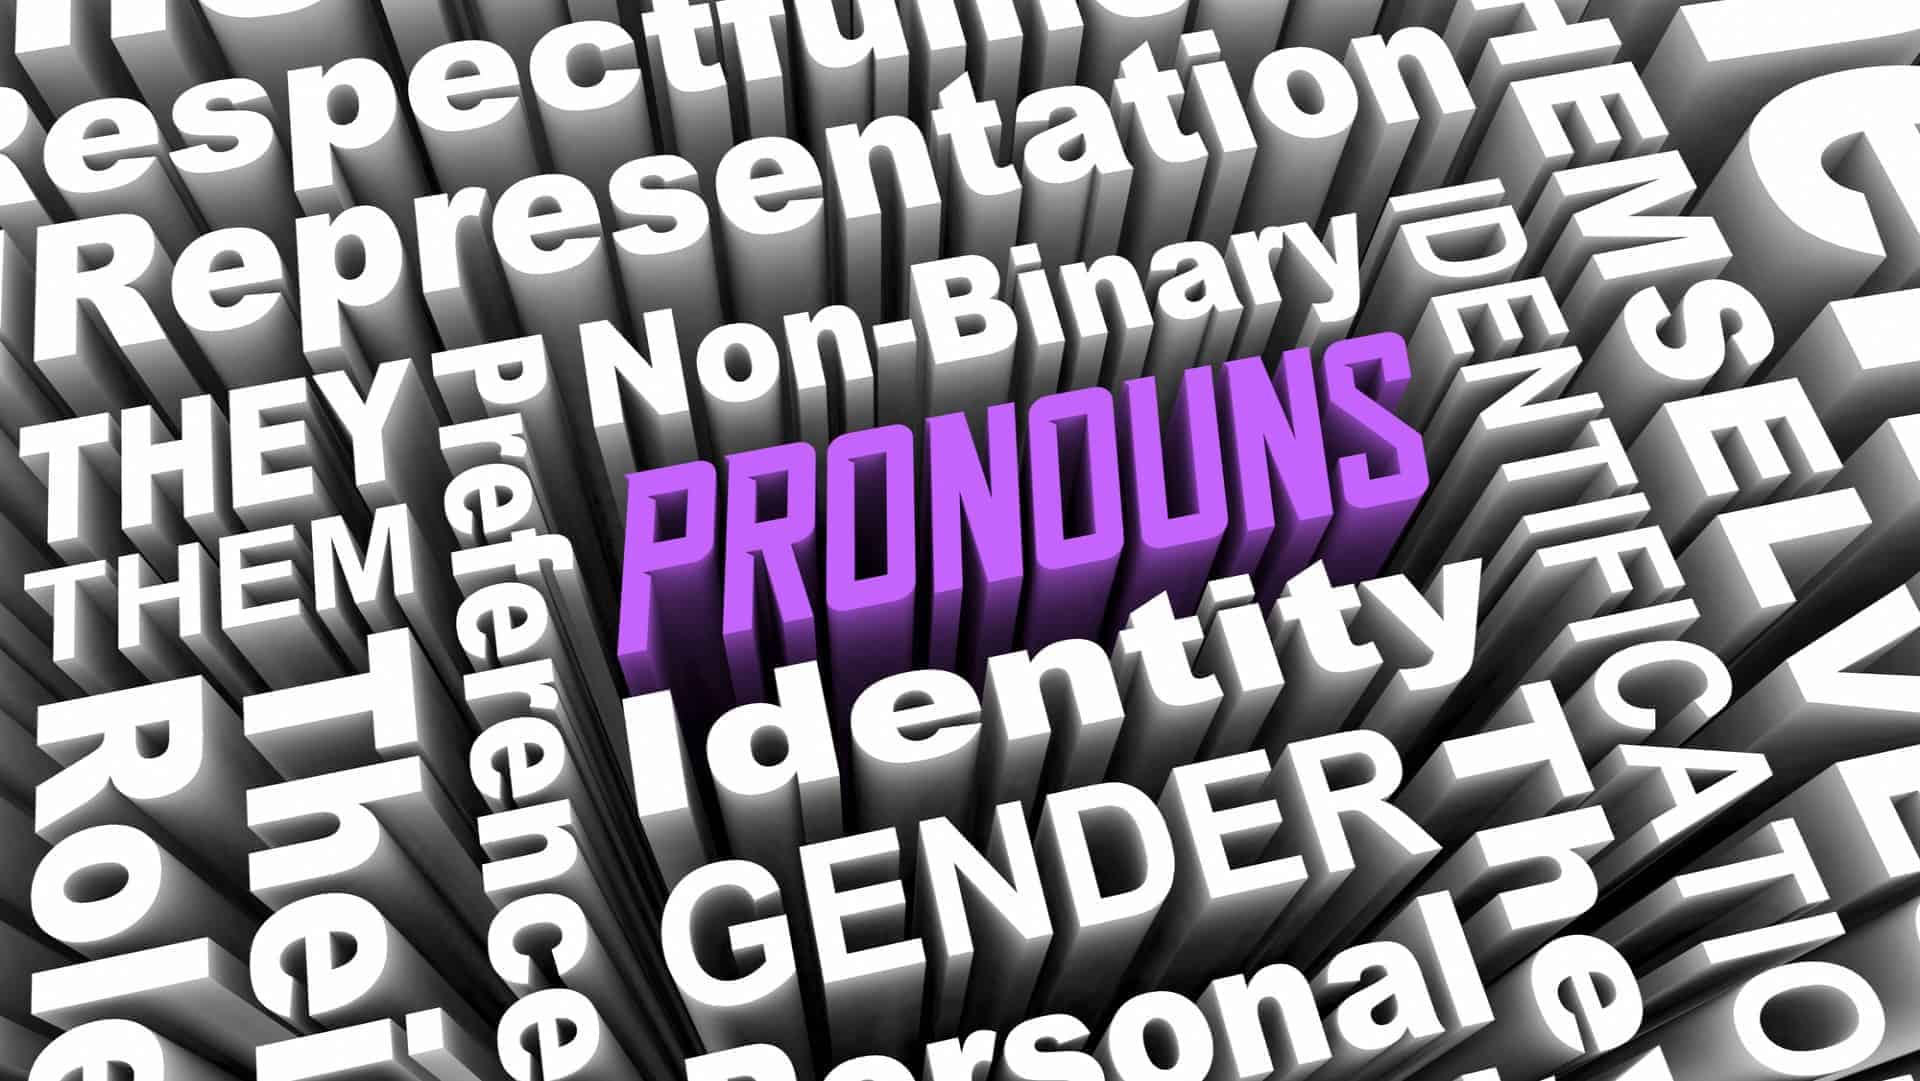 proper pronouns for genders